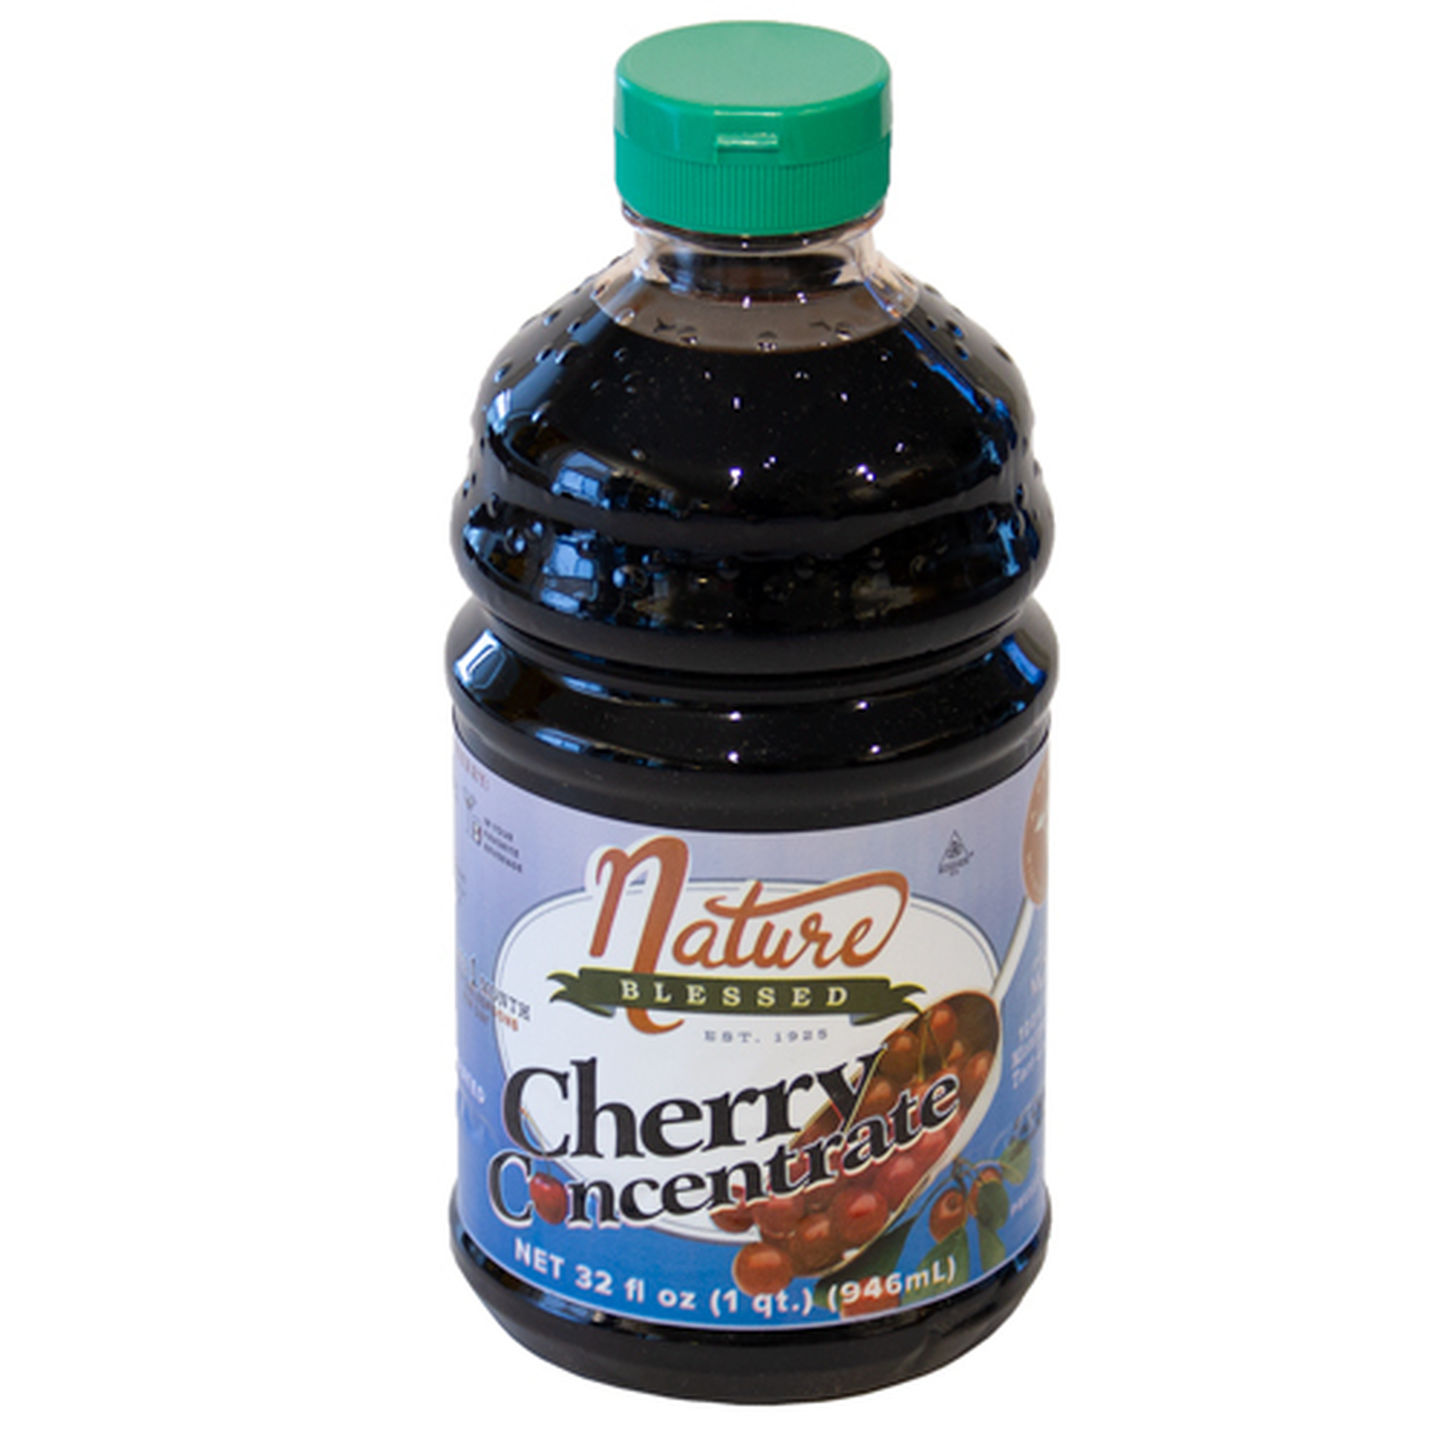 tart cherry pills or juice